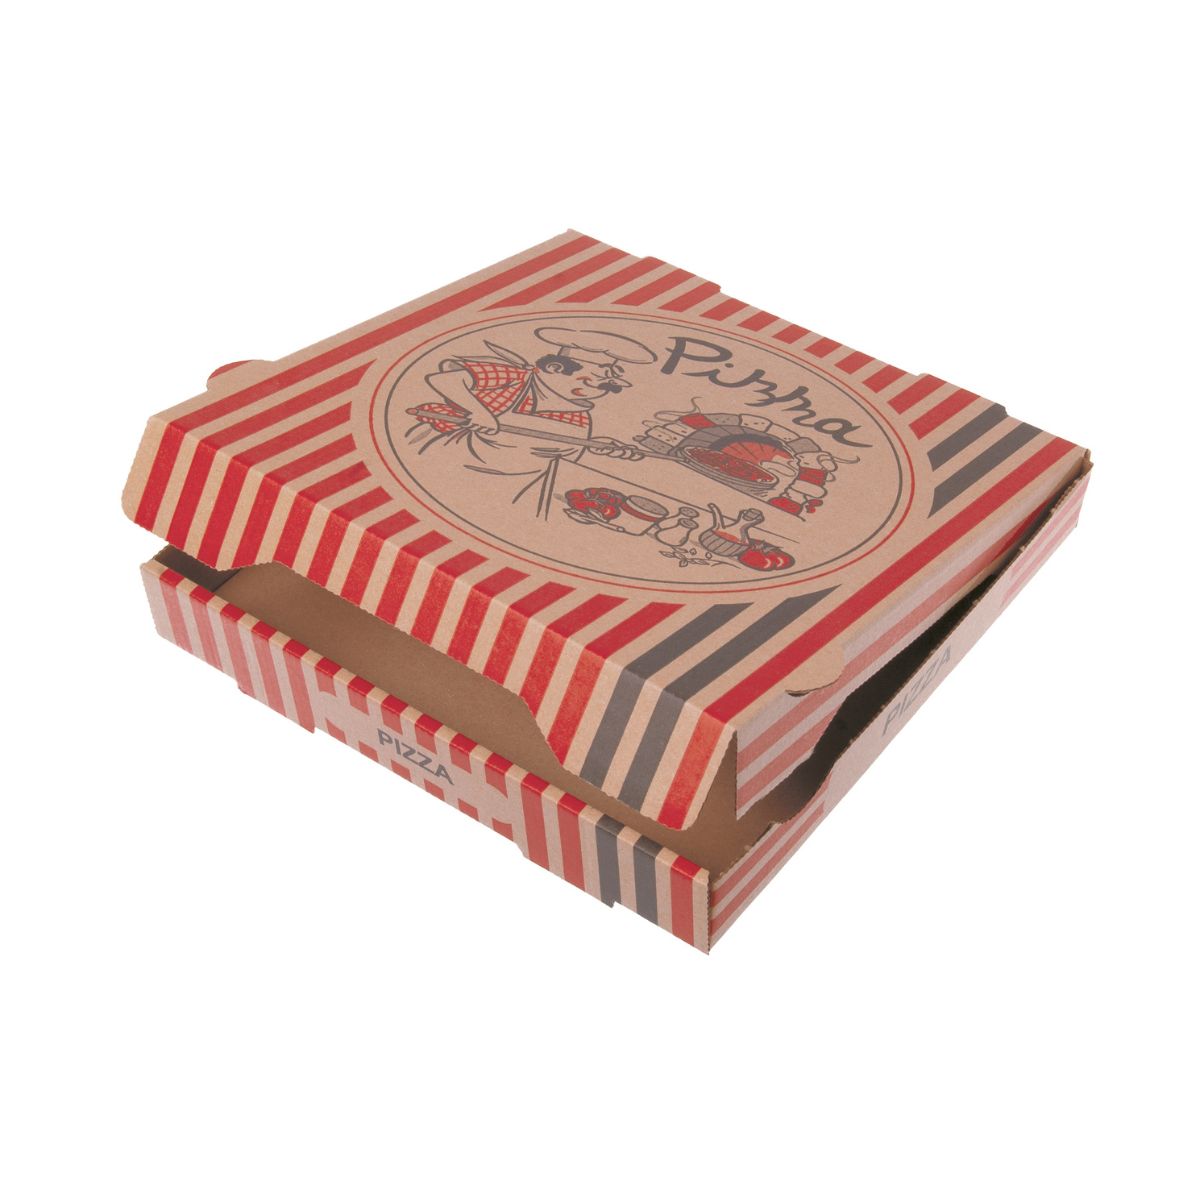 Pizzabox 22x22x4cm | Kraft rot-braun